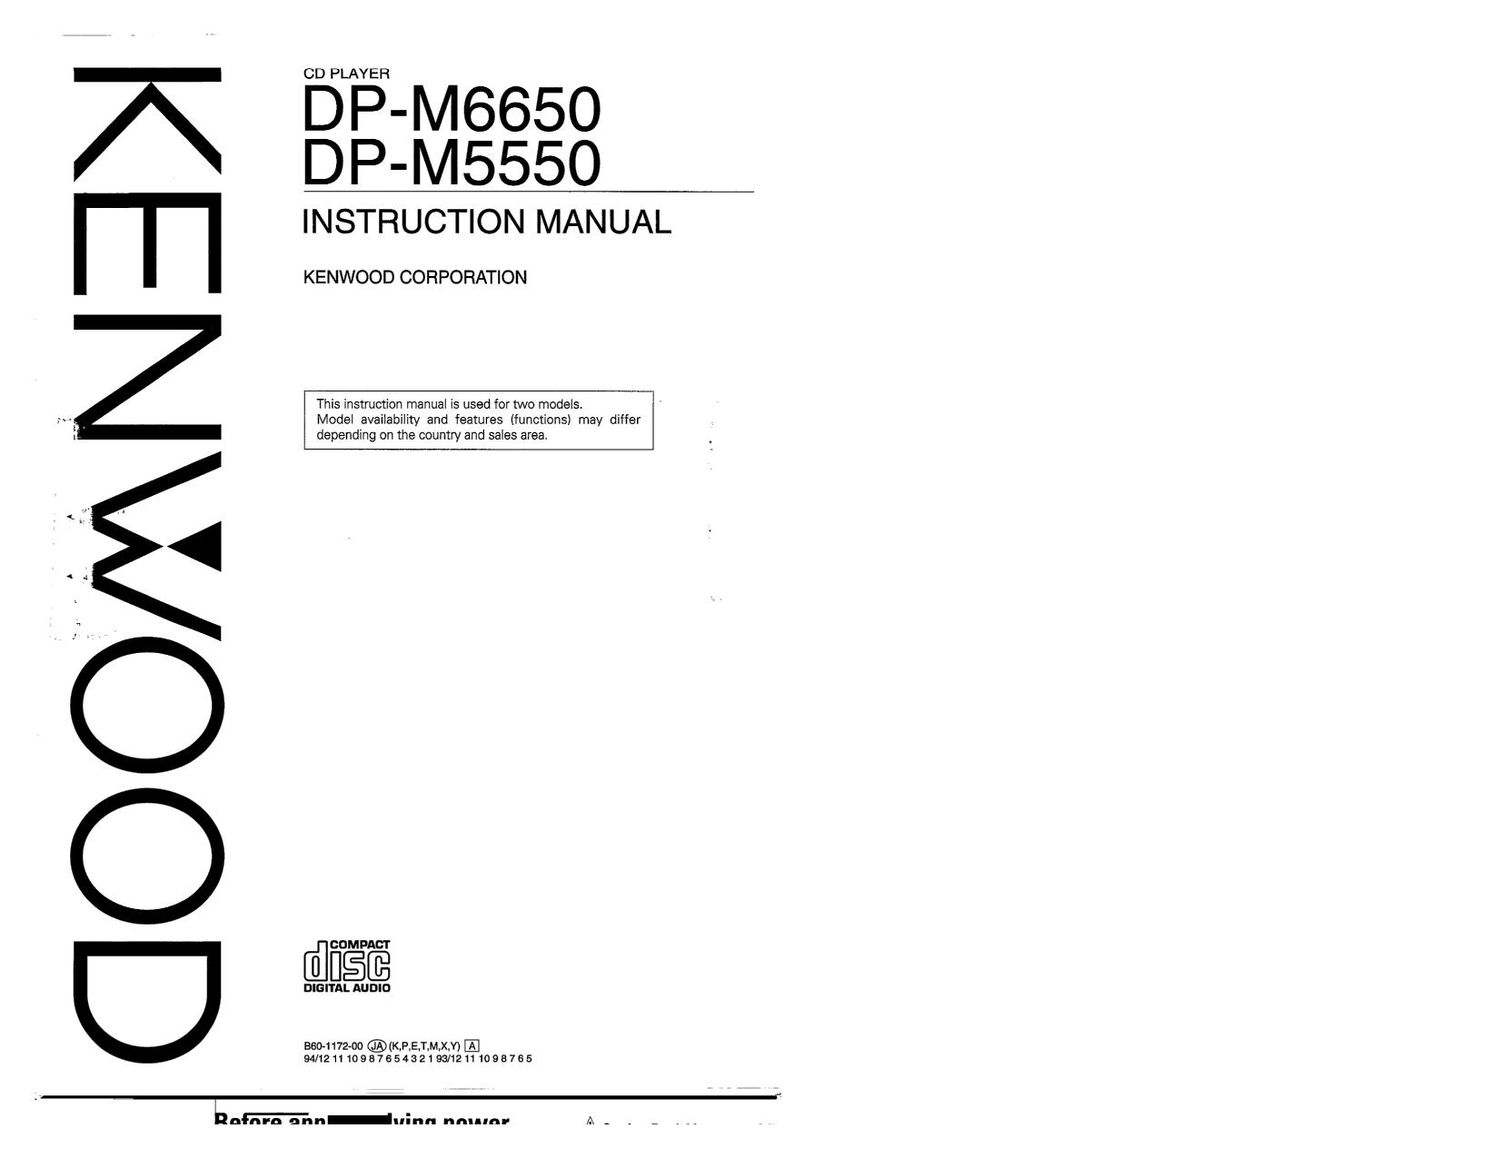 Kenwood DPM 6650 Owners Manual